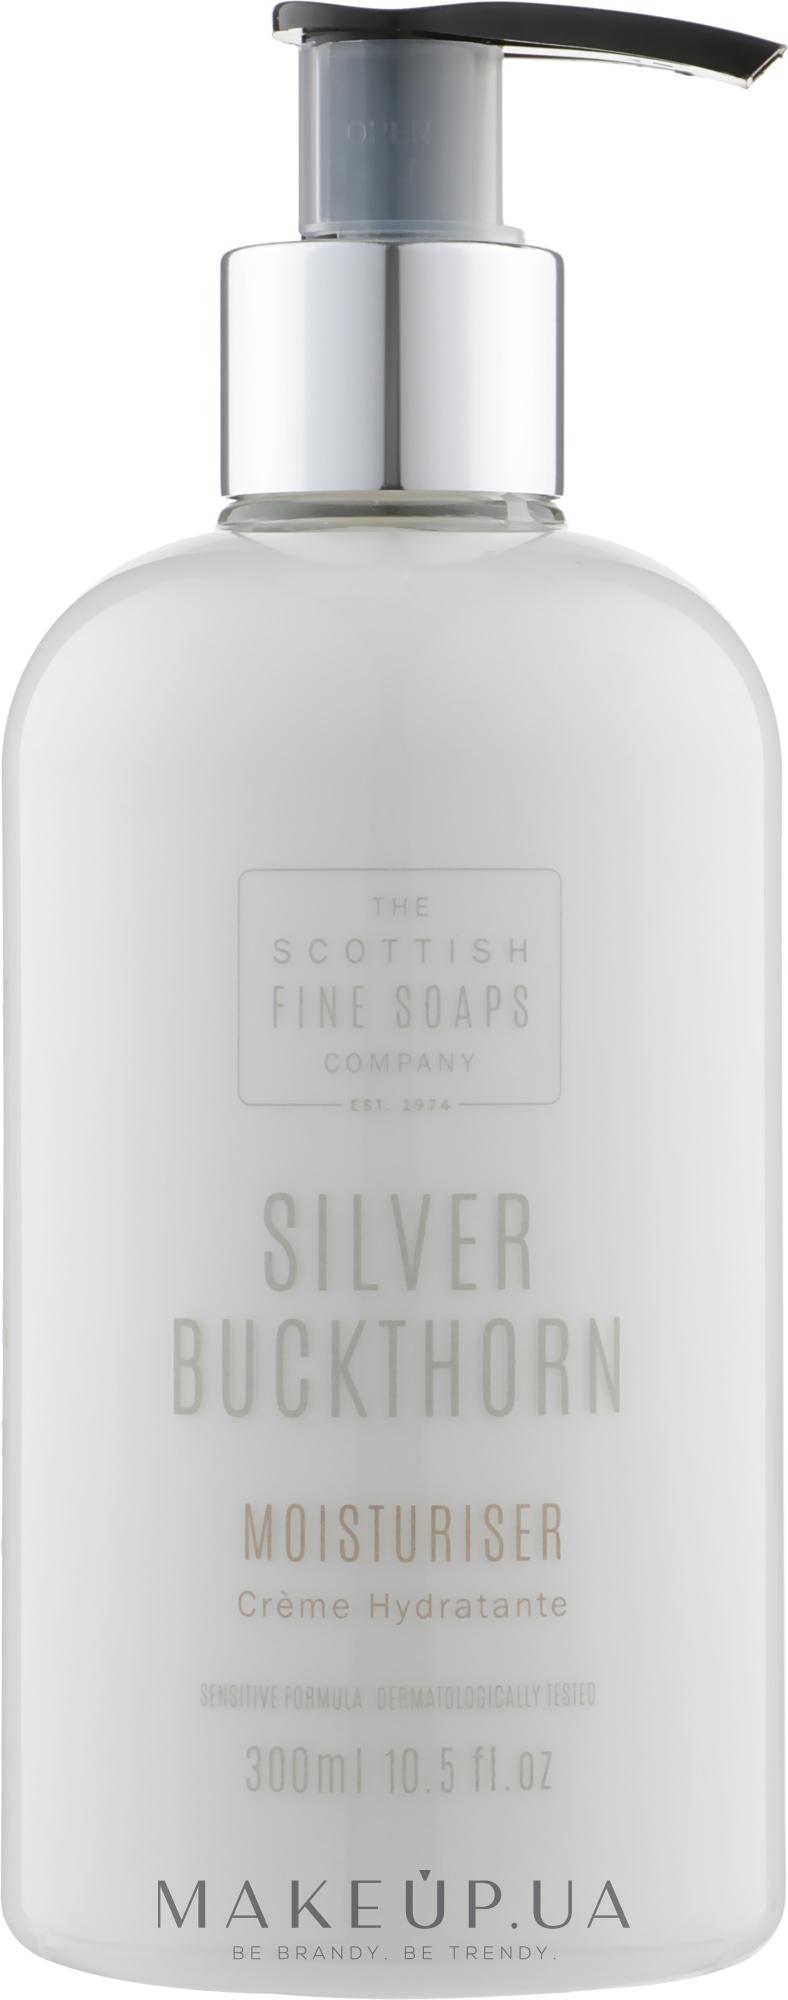 Увлажняющий крем для тела - Scottish Fine Soaps Silver Buckthorn Moisturiser — фото 300ml